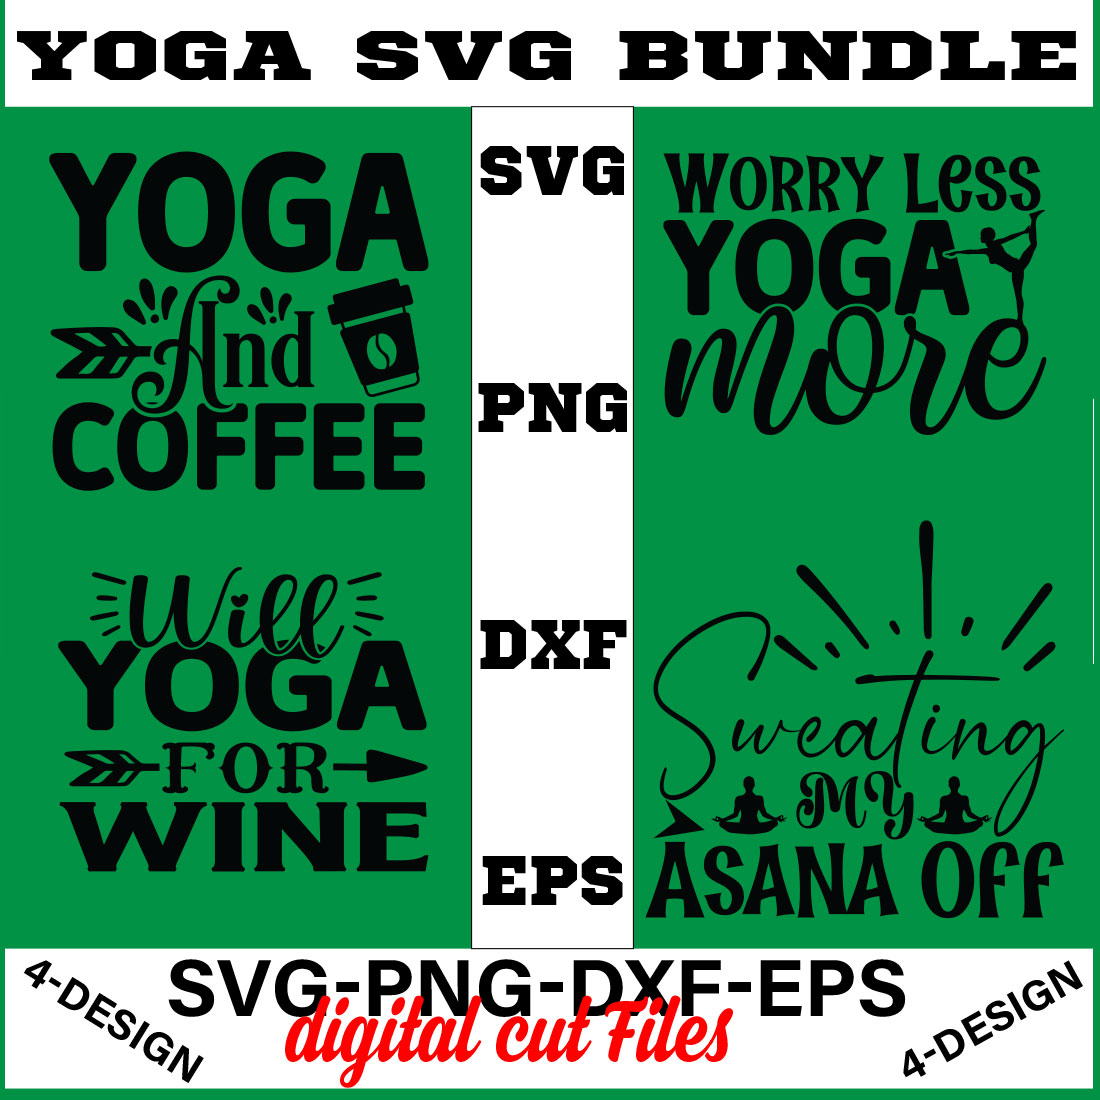 Yoga SVG Bundle - Namaste shirt SVG for Cricut - Good vibes Tee SVG bundle Volume-04 cover image.